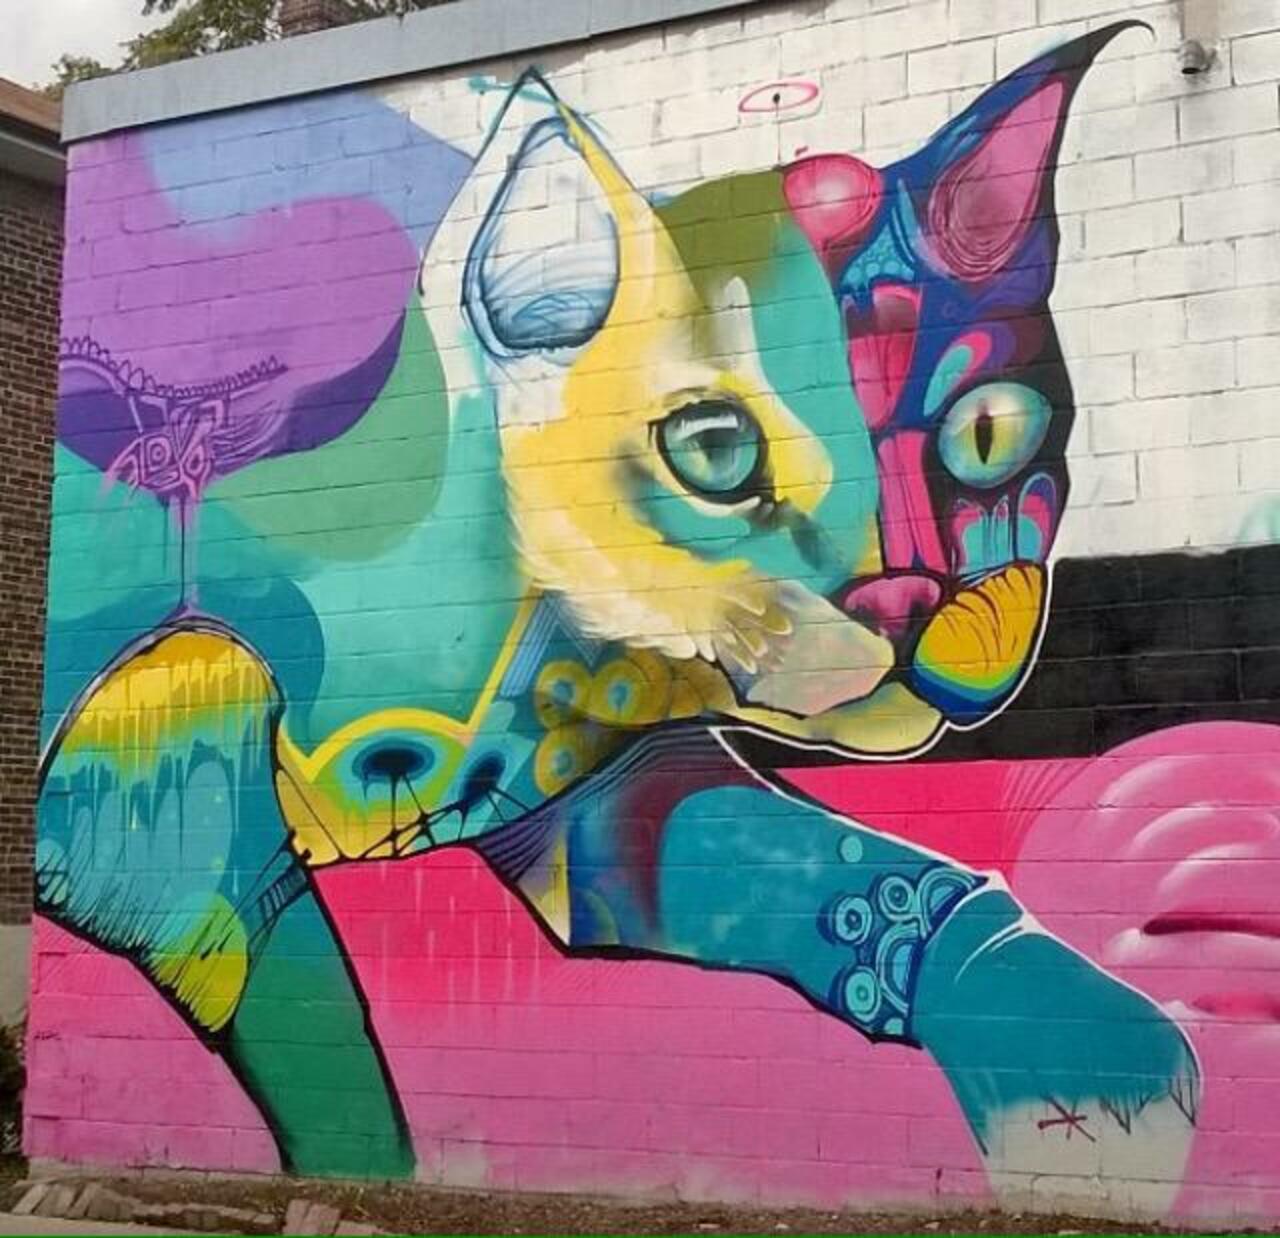 RT @dimensionscf: Not sure who to give credit to but wow. #torontostreetart #torontoart #streetart #graffiti #cats http://t.co/SvnEamEsAP